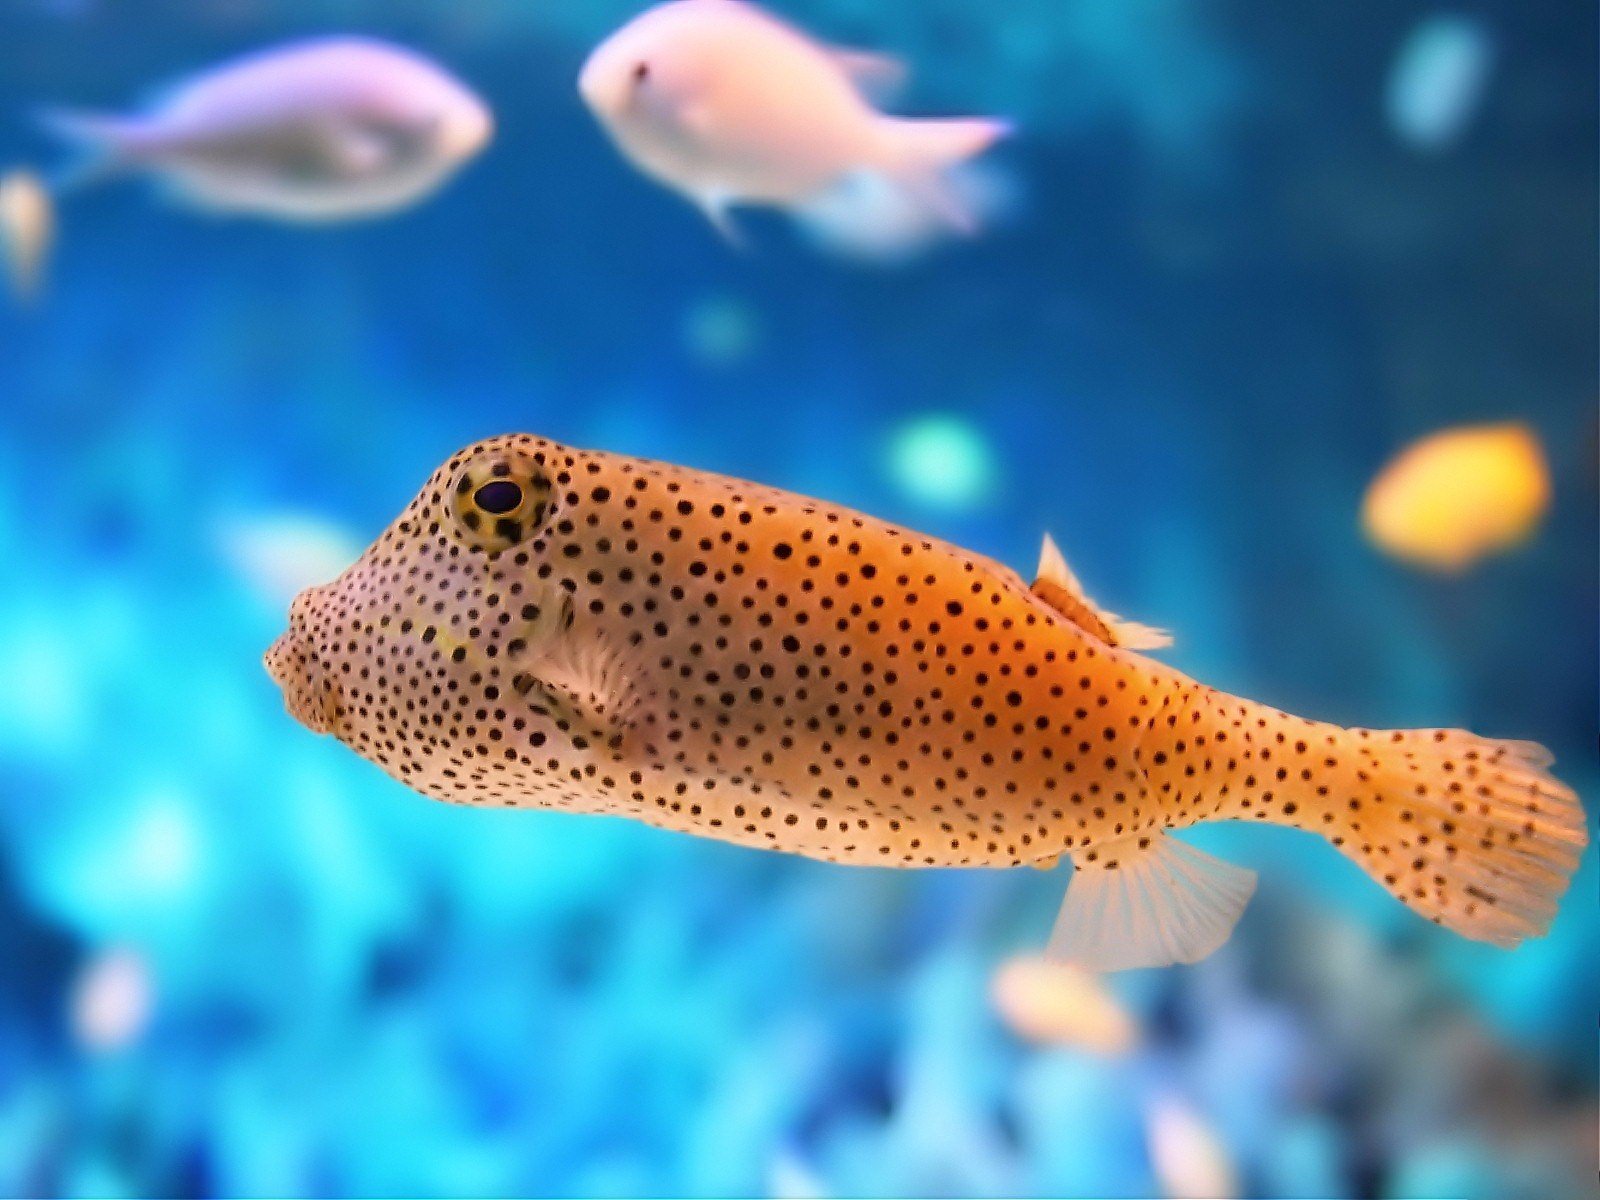 General 1600x1200 fish animals sea blue orange dots underwater sea life turquoise